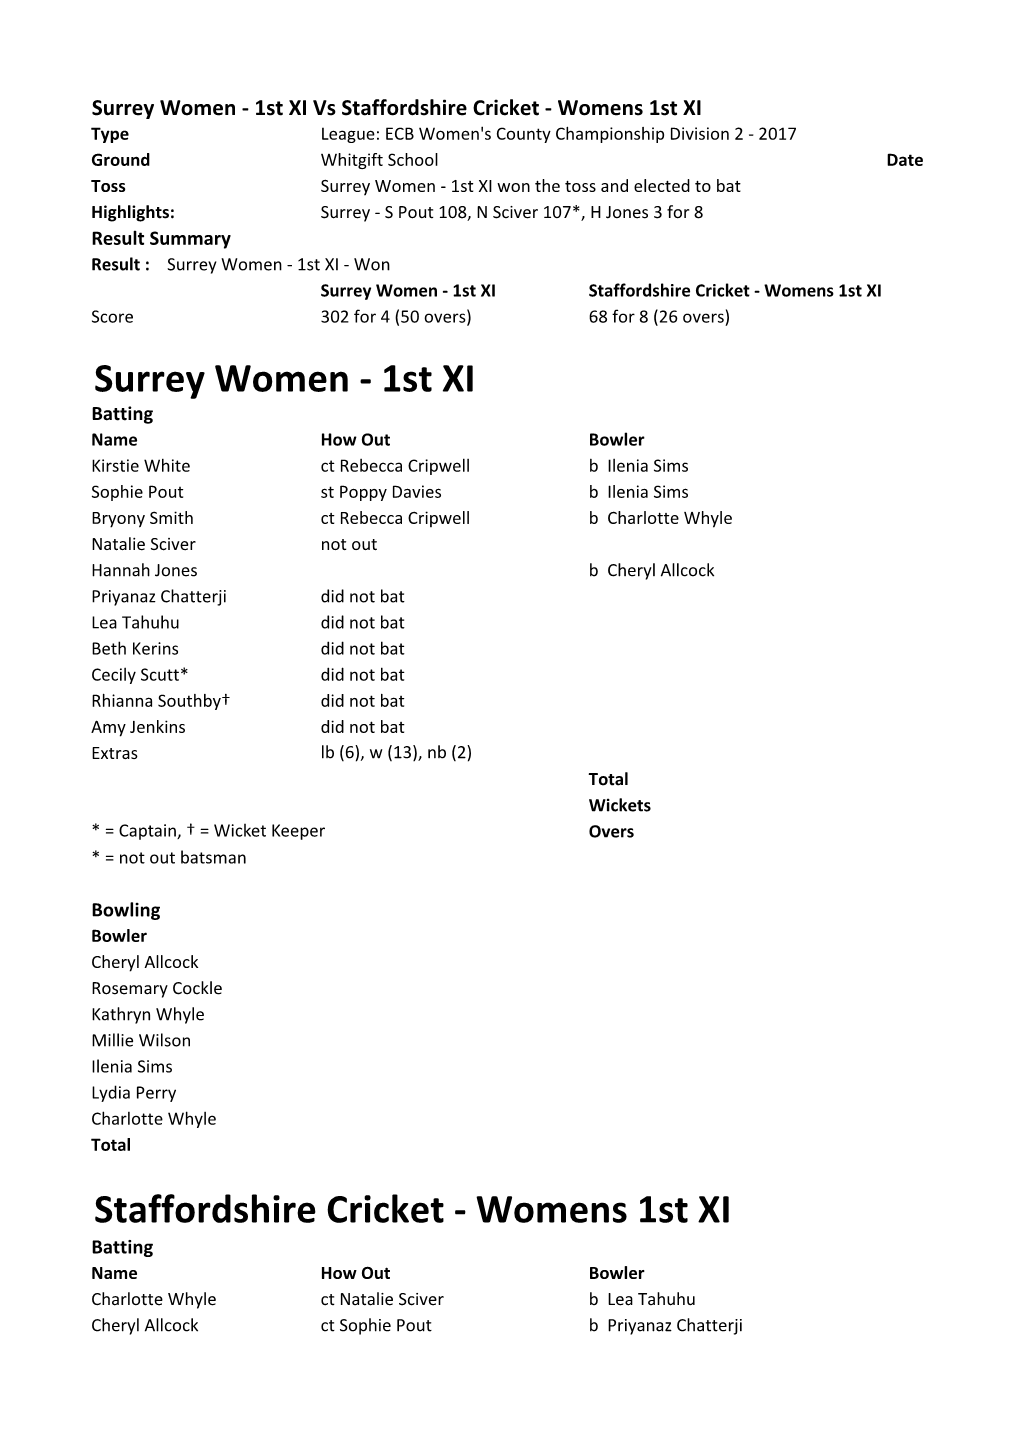 1St XI Staffordshire Cricket